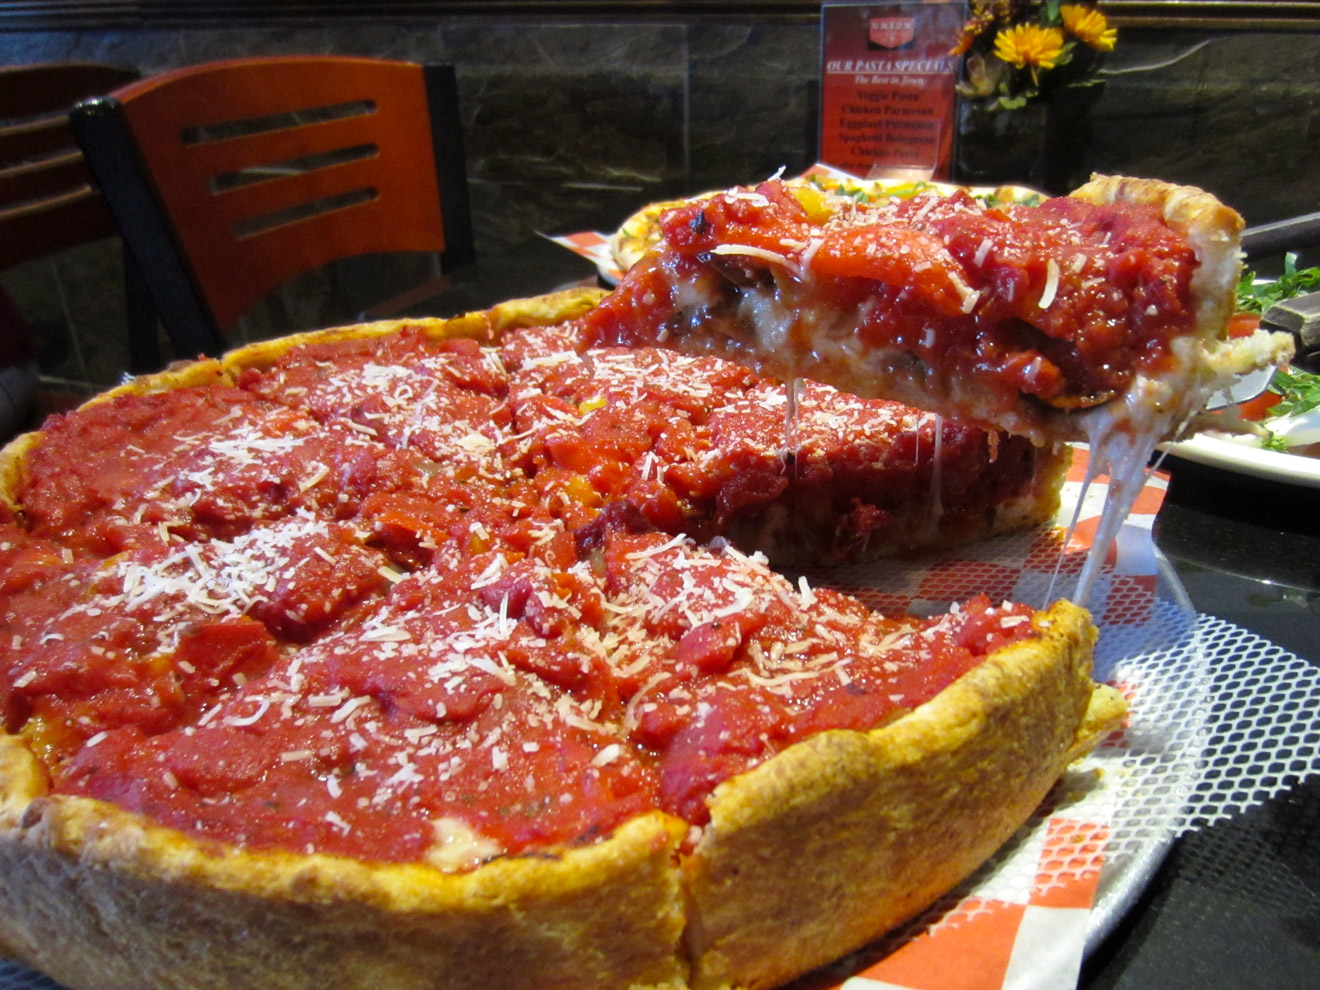 union-pizza-company-chicago-deep-dish-pizza-slice.jpg